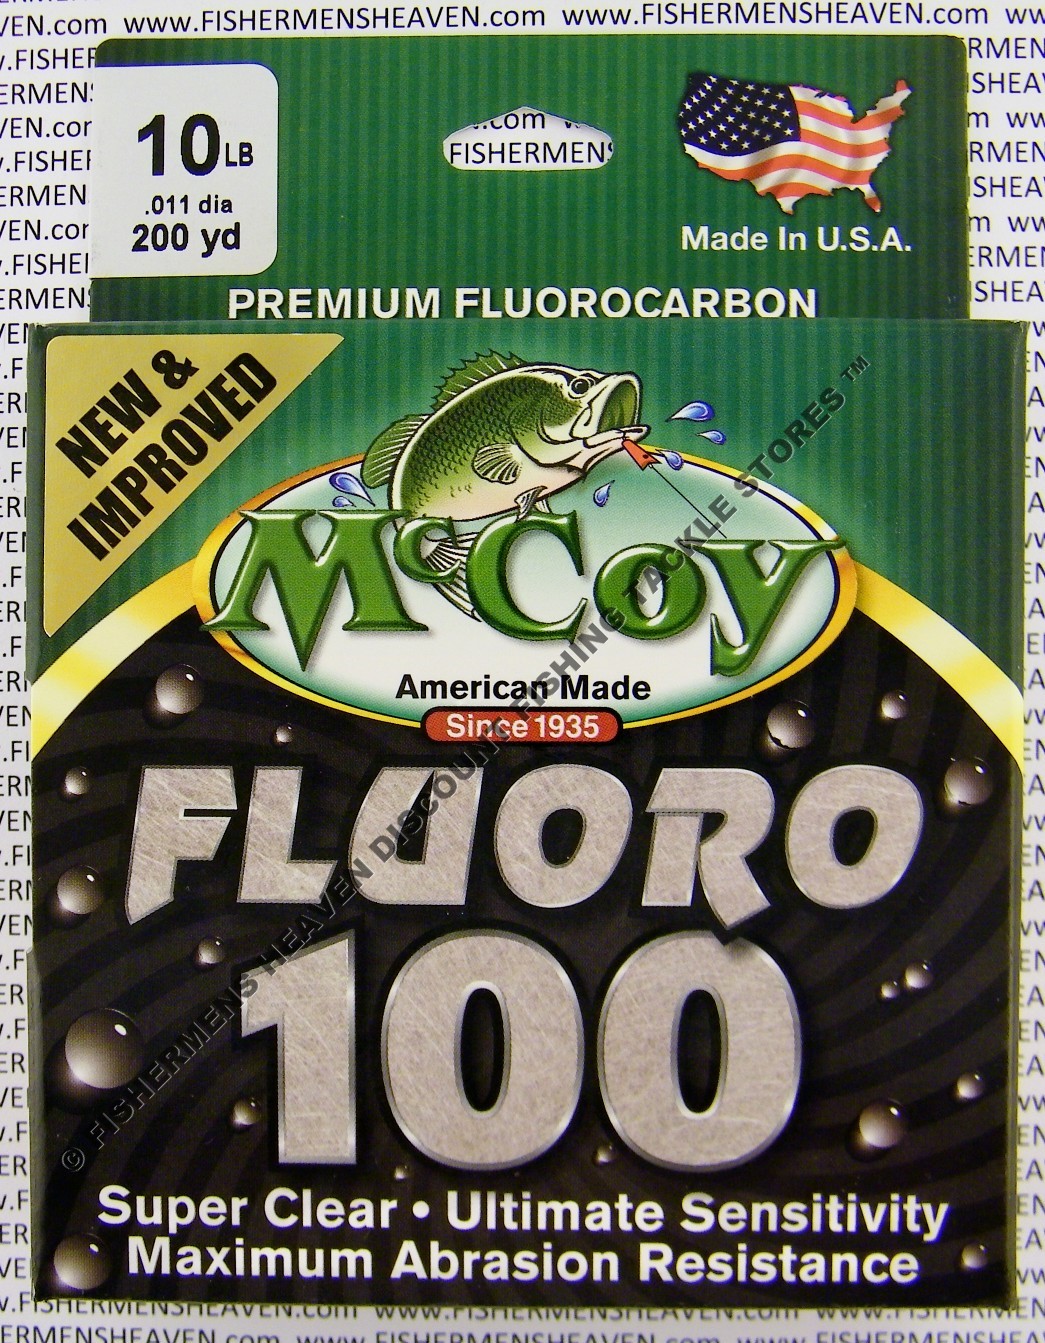 McCoy Fishing Fluoro 100 Fluorocarbon Fishing Line